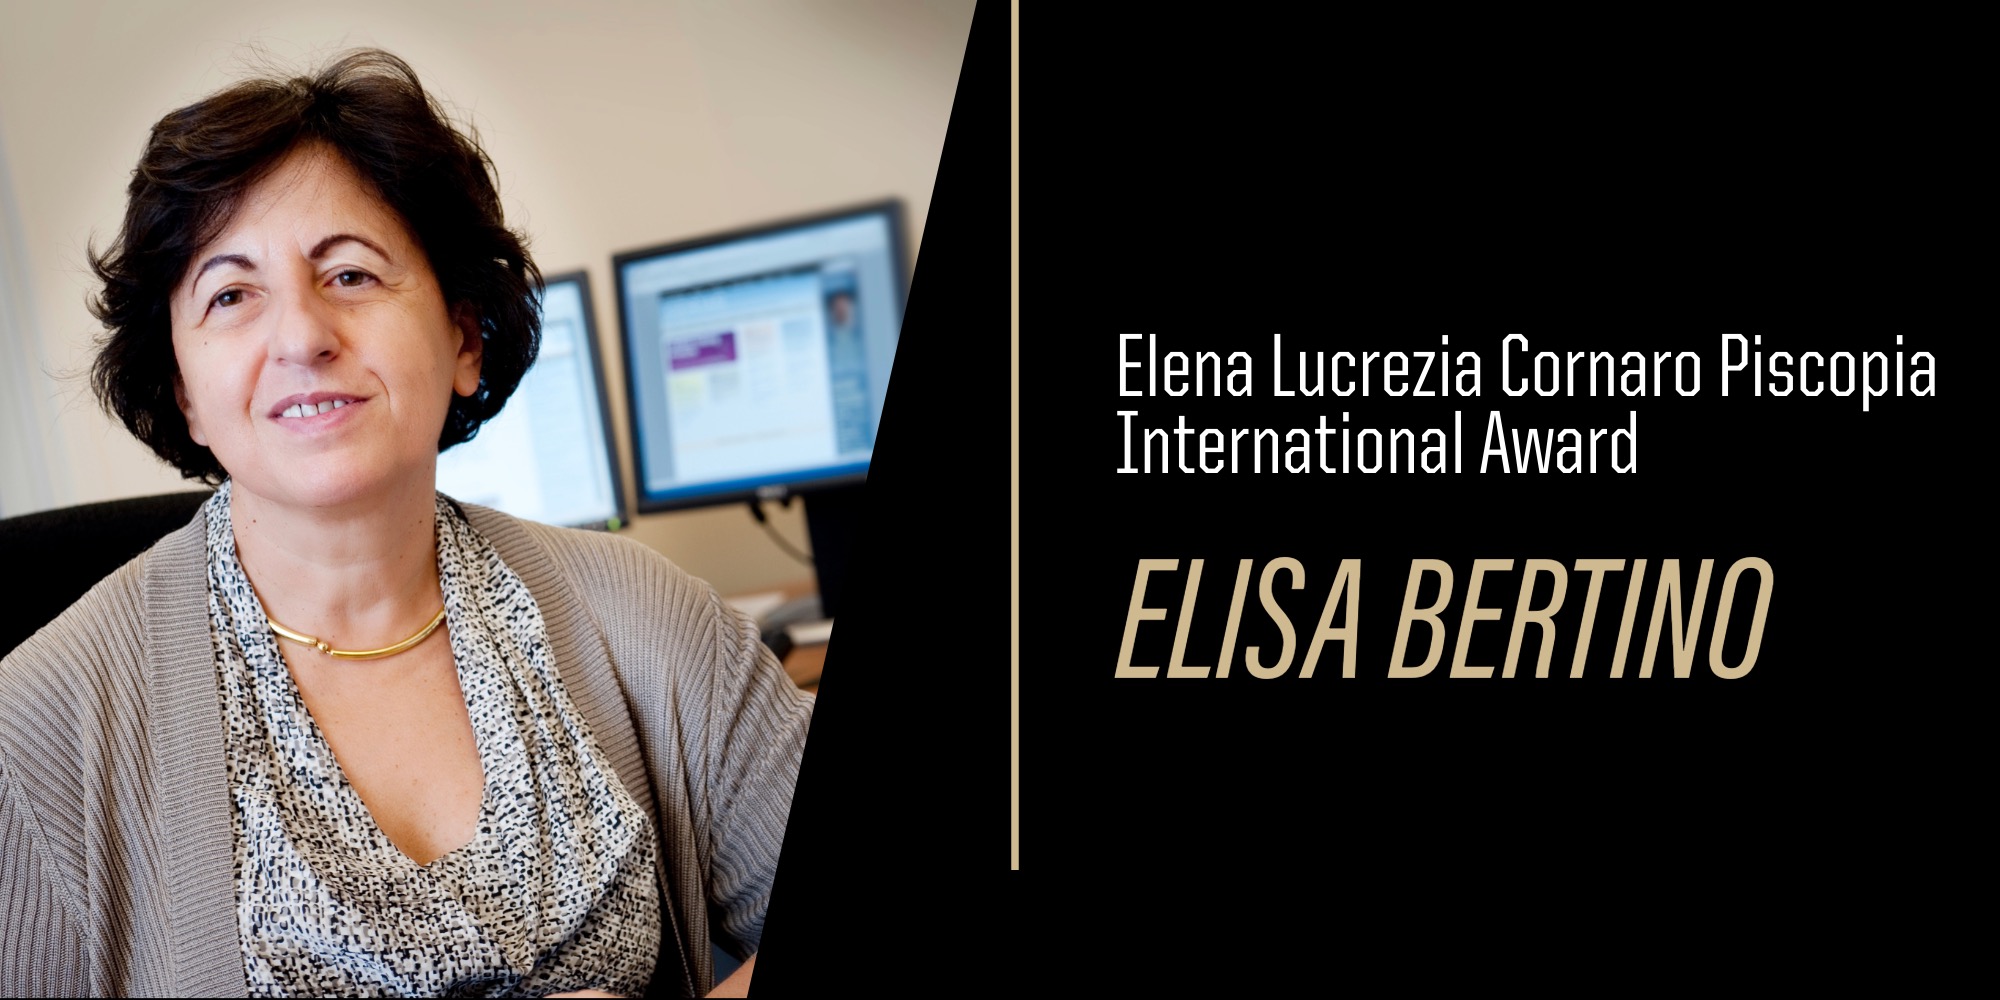 Elisa Bertino receives the inaugural Elena Lucrezia Cornaro Piscopia International Award